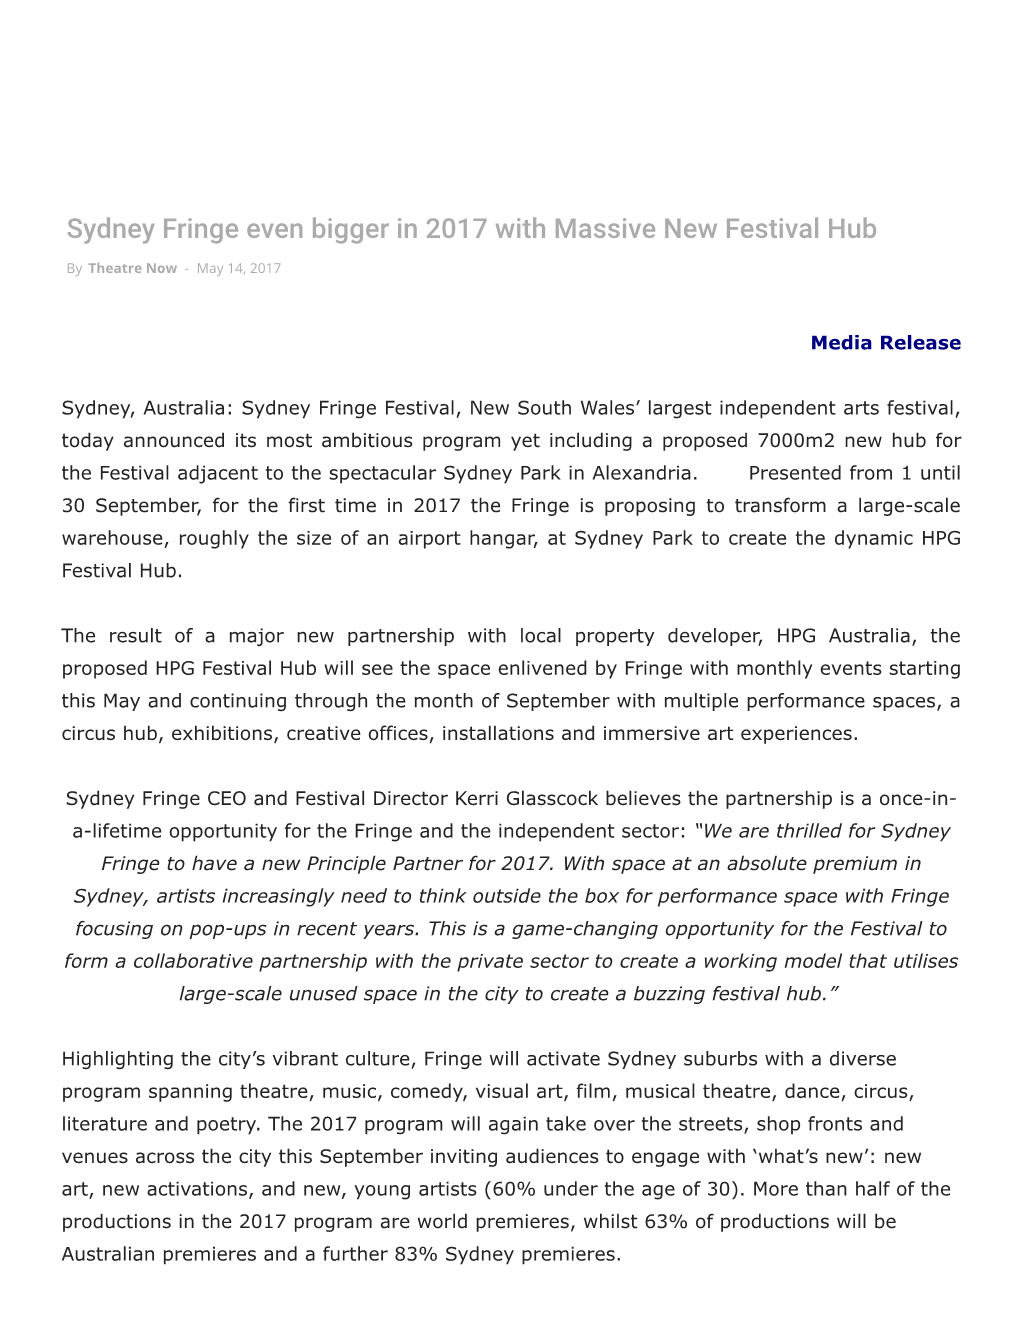 Sydney Fringe Even Bigger in 2017 with Massive New Festival Hub